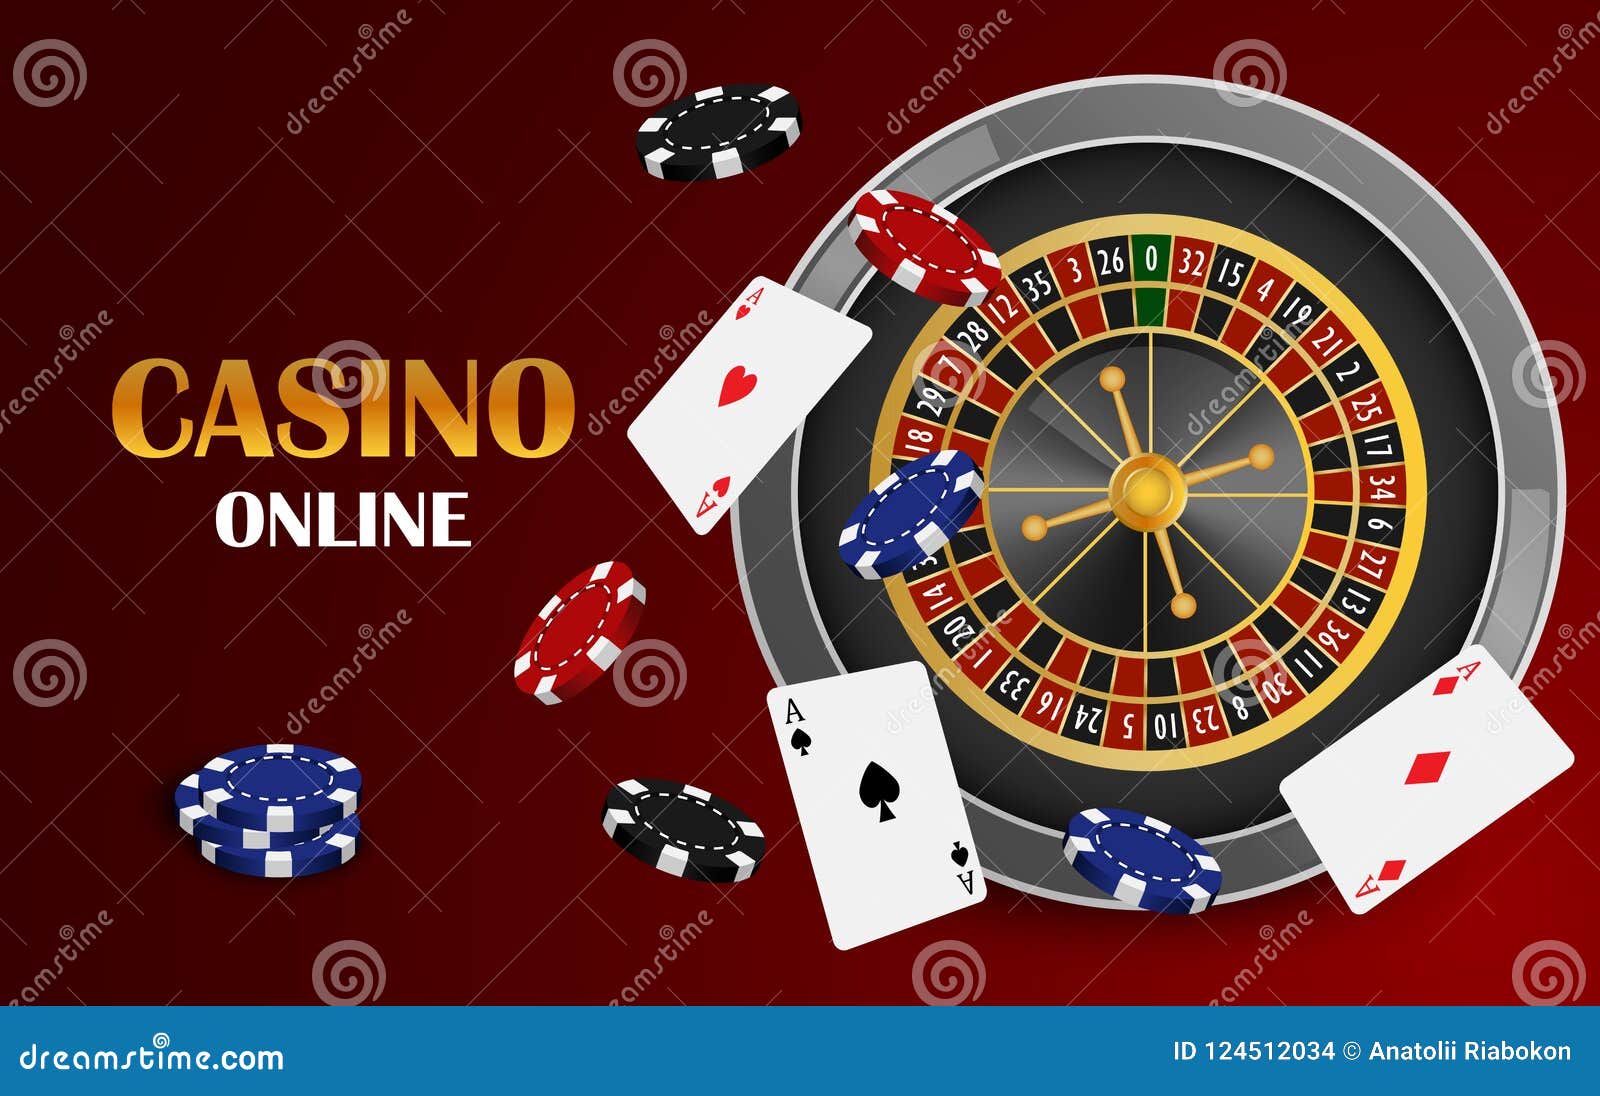 casino org 888 password